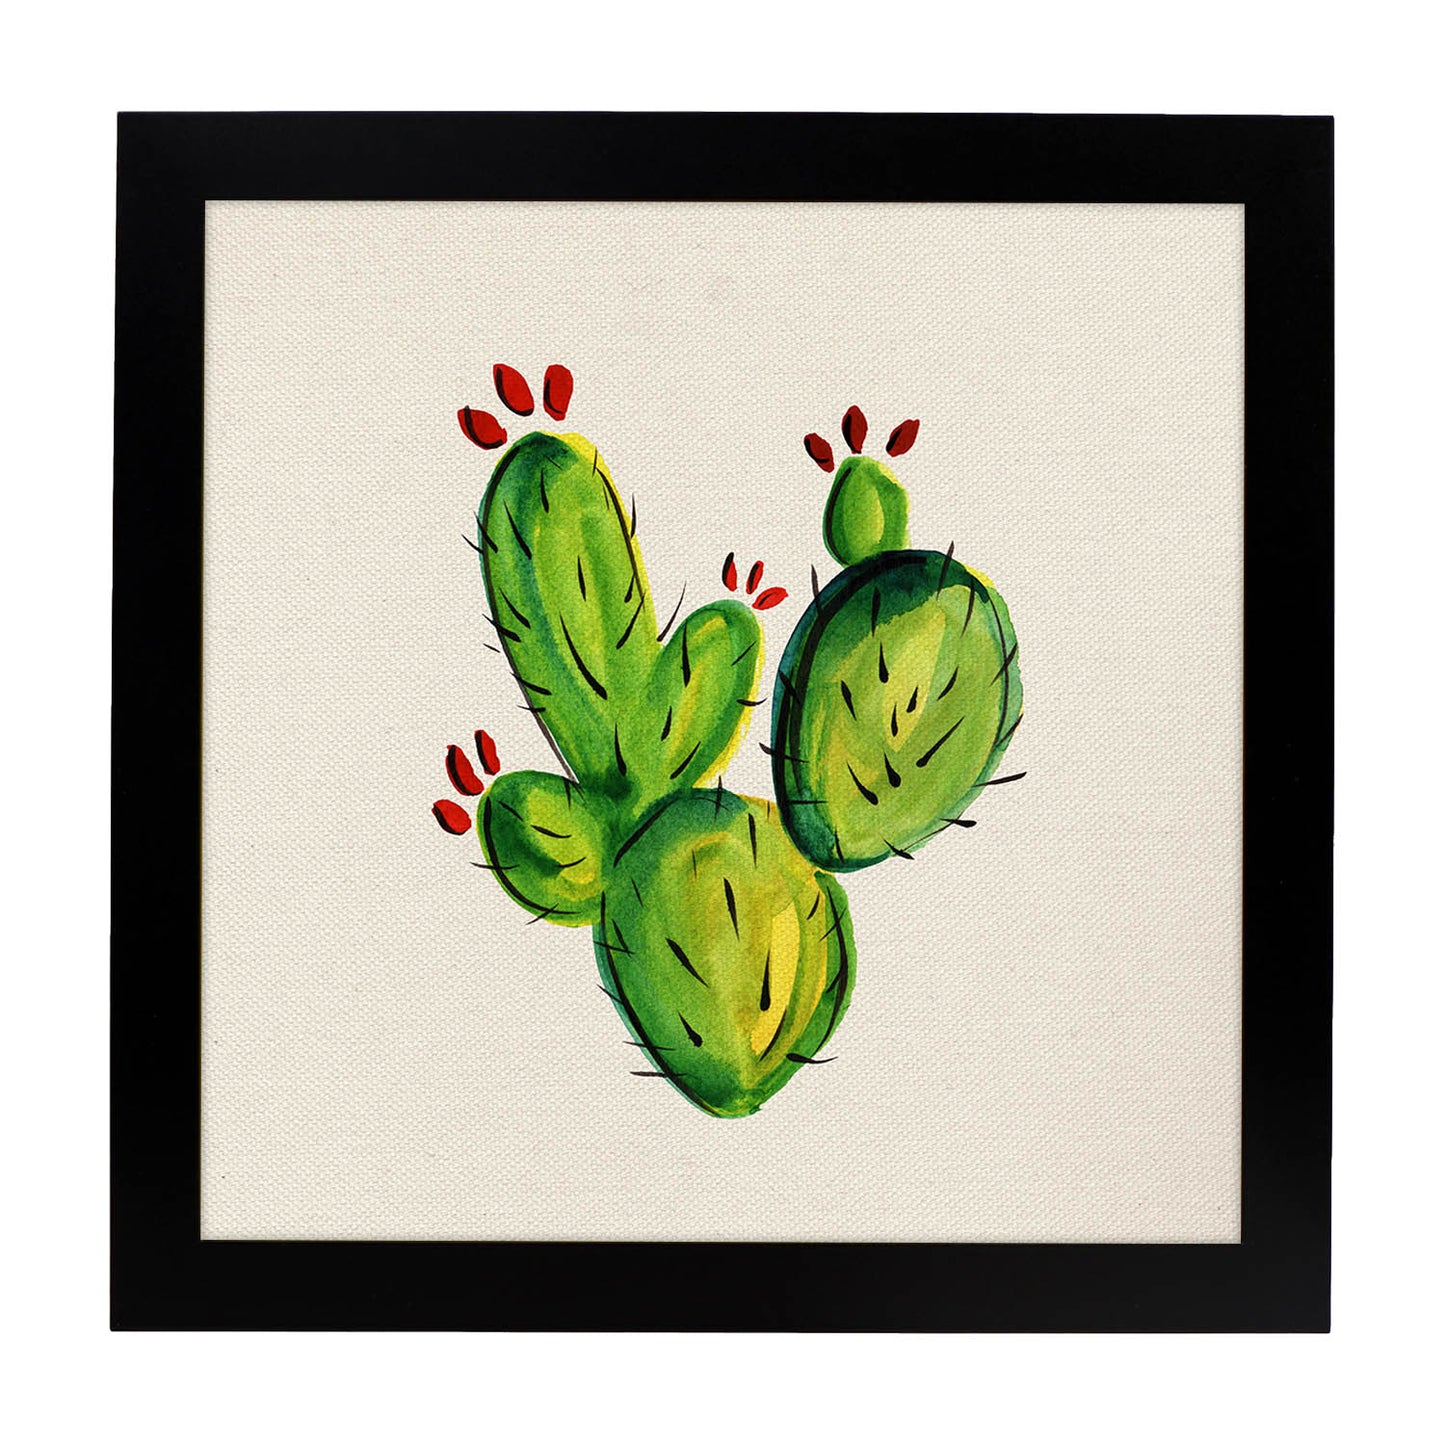 Poster de cactus dibujado. Lámina de Mírame, no me toques-Artwork-Nacnic-25x25 cm-Marco Negro-Nacnic Estudio SL